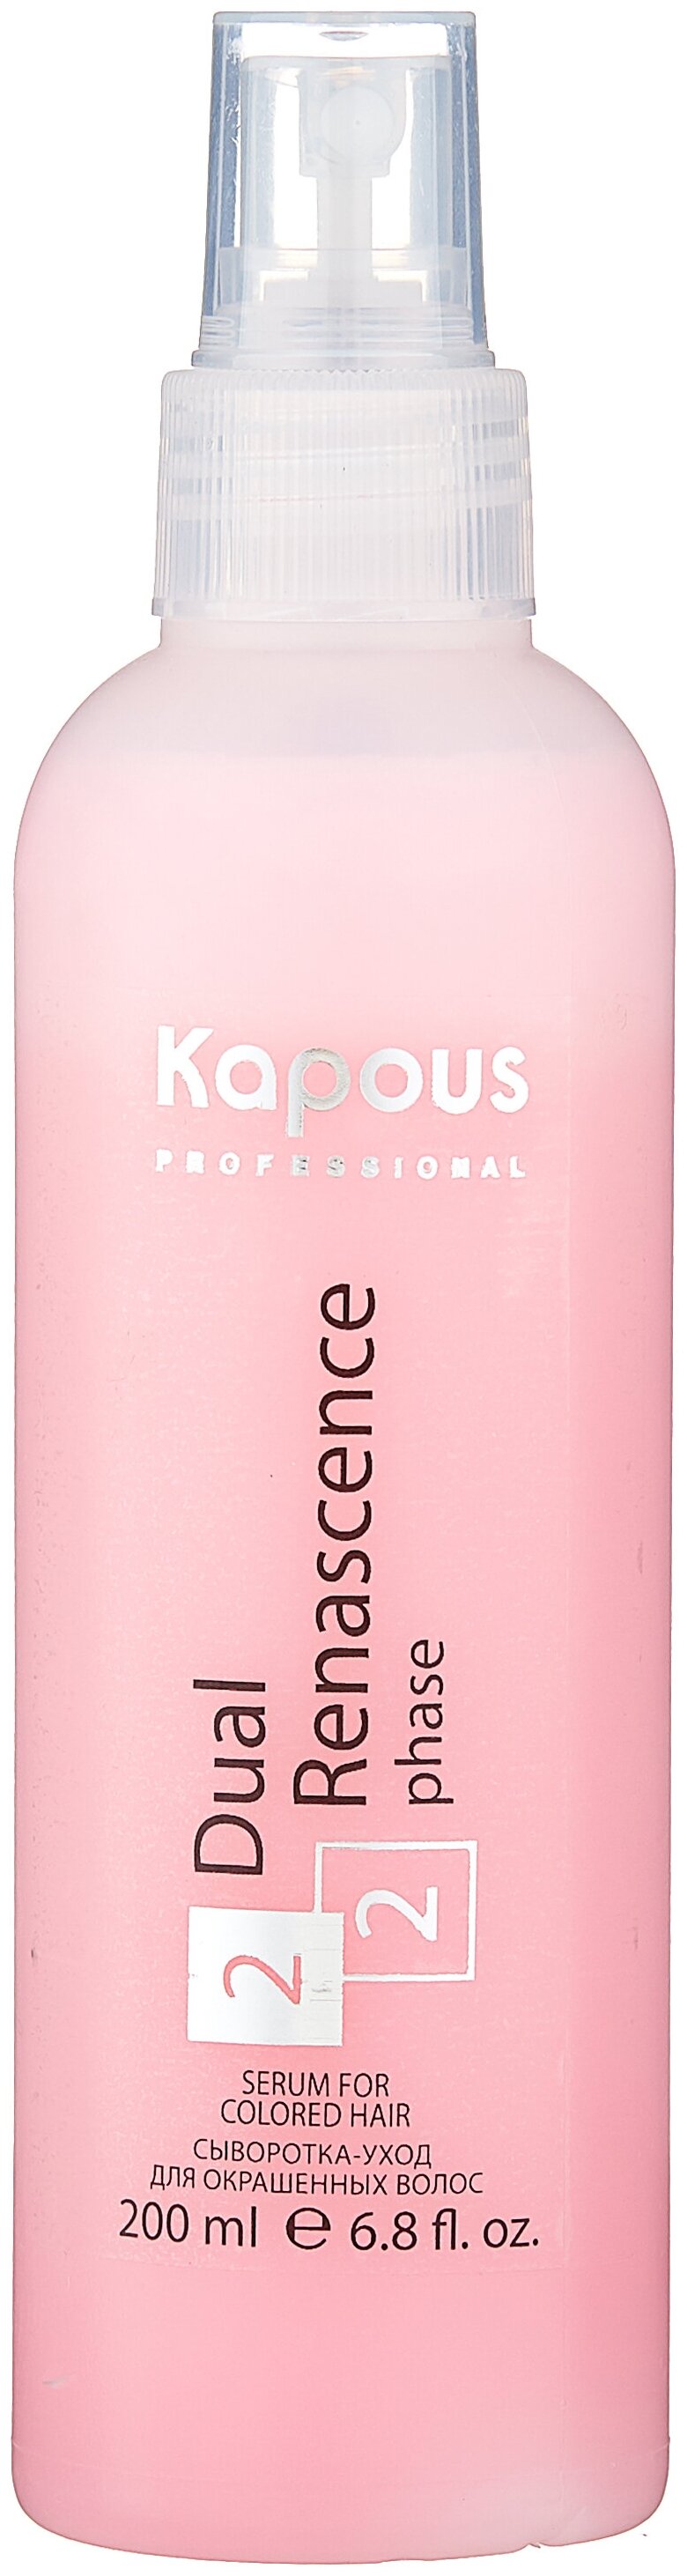 Kapous / Сыворотка-уход для окрашенных волос (розовая) /  Dual Renascence 2 phase